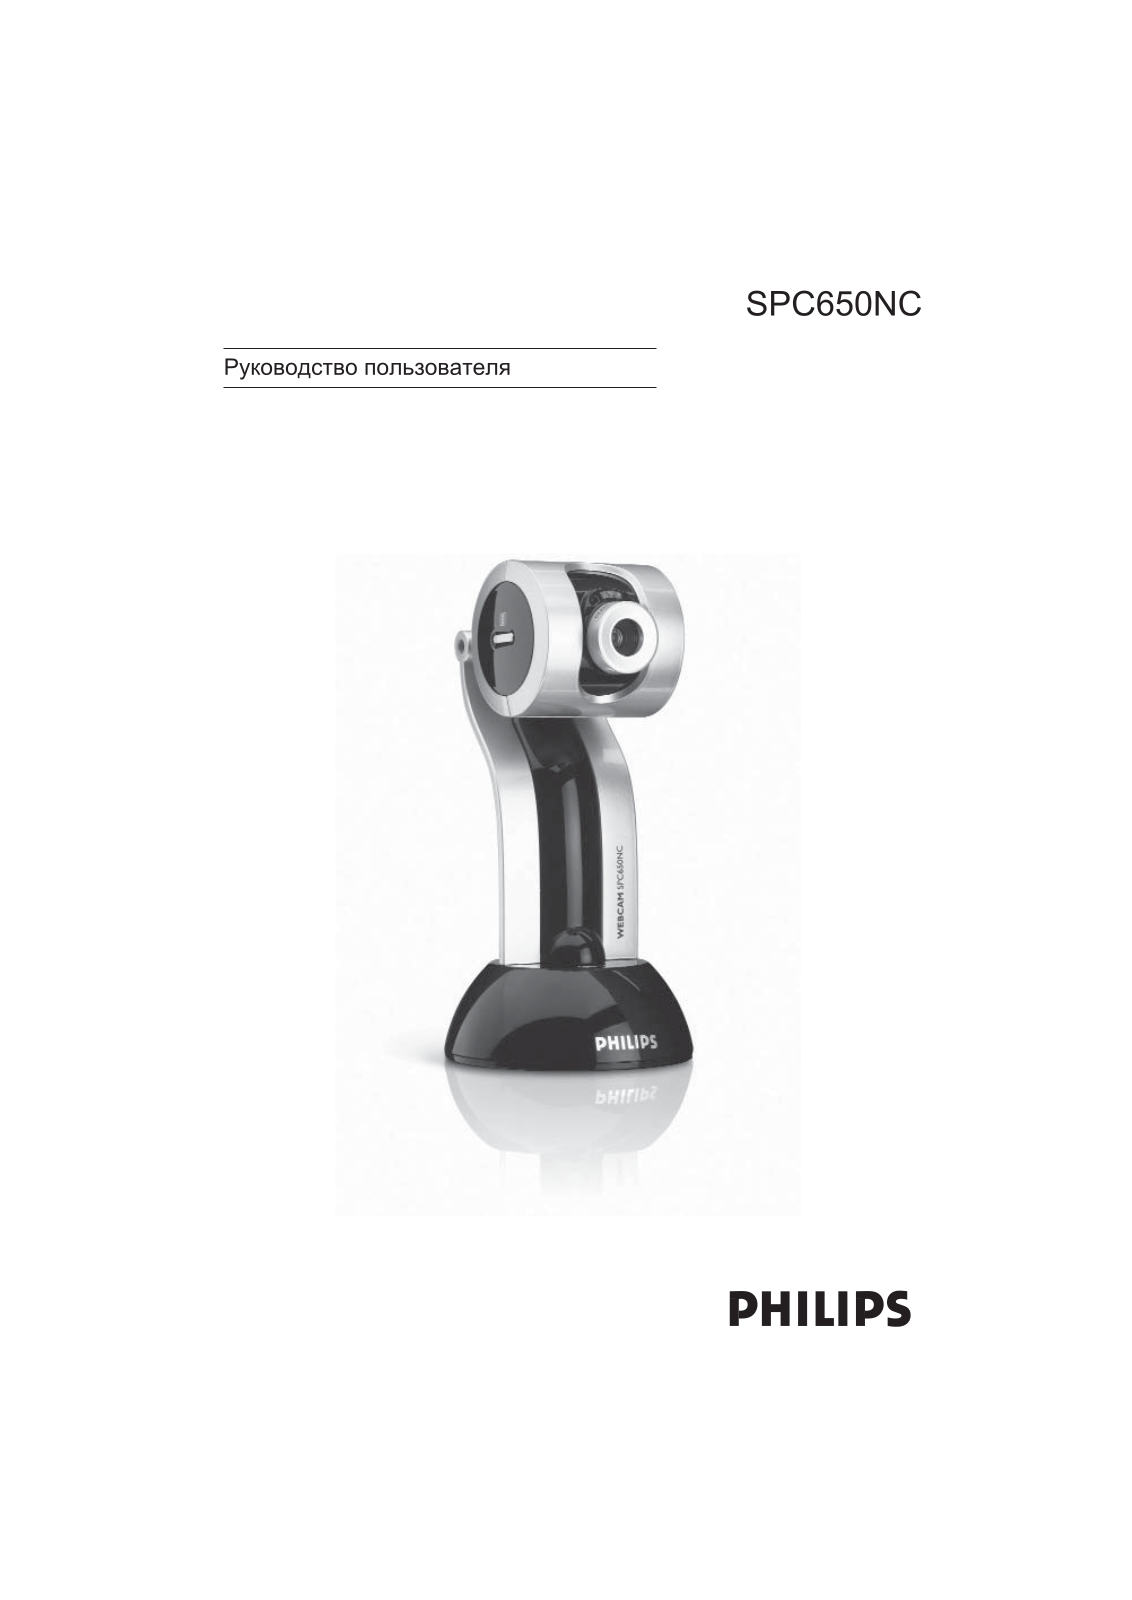 PHILIPS SPC650NC User Manual